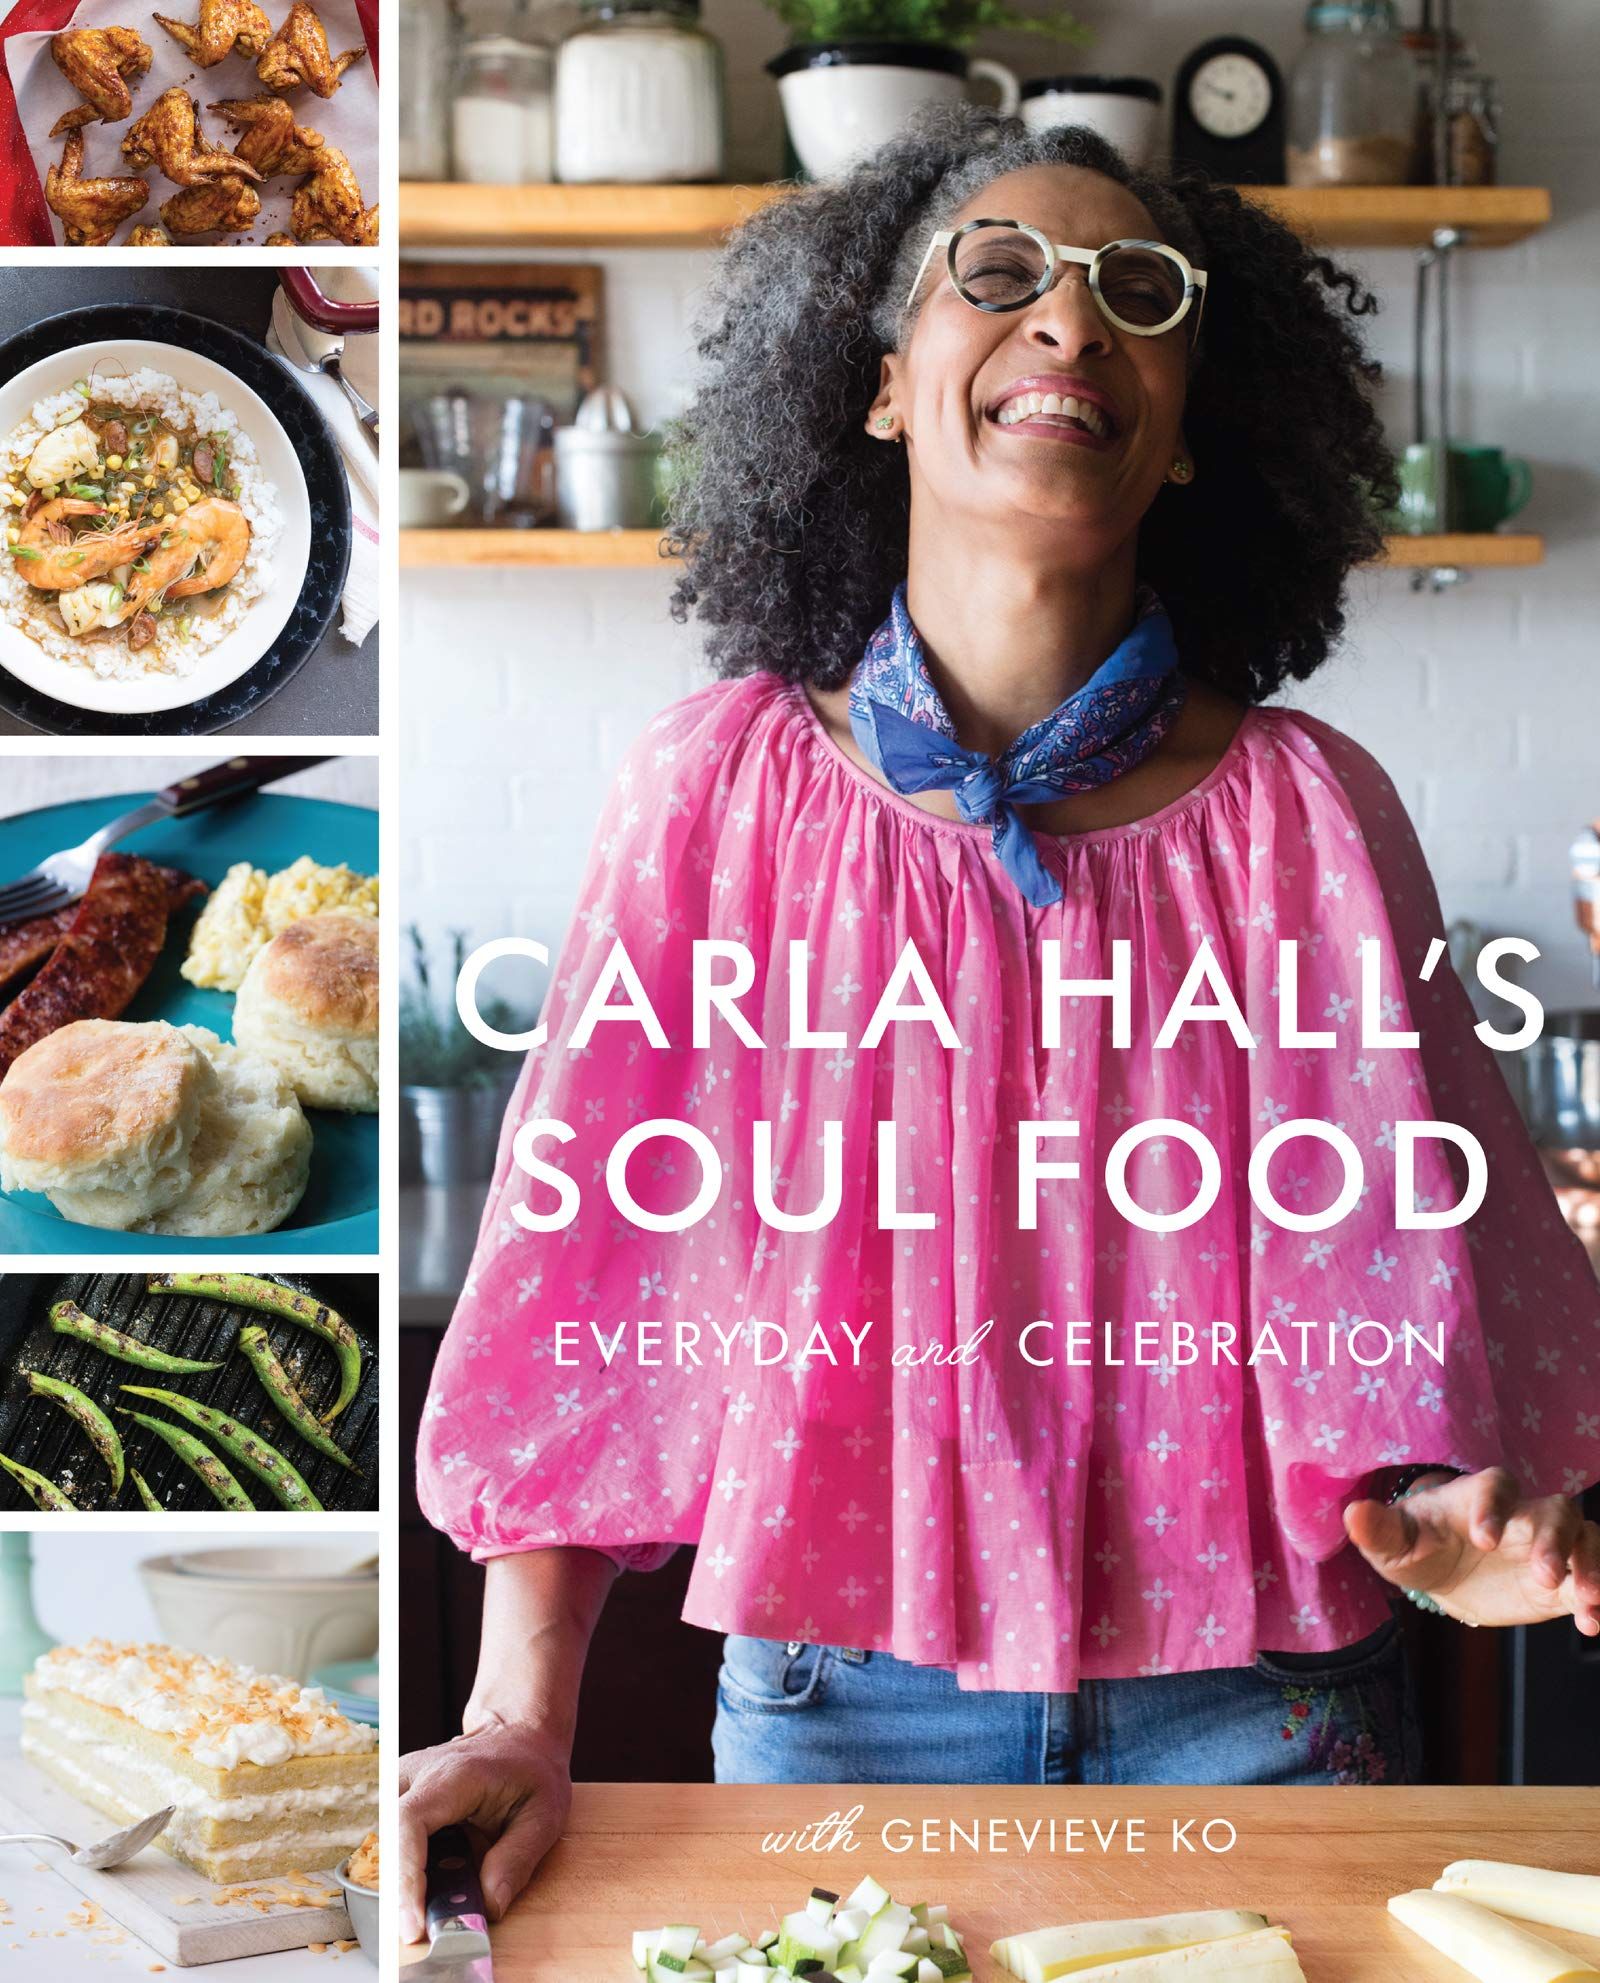 Carla Hall's Soul Food cookbook cover